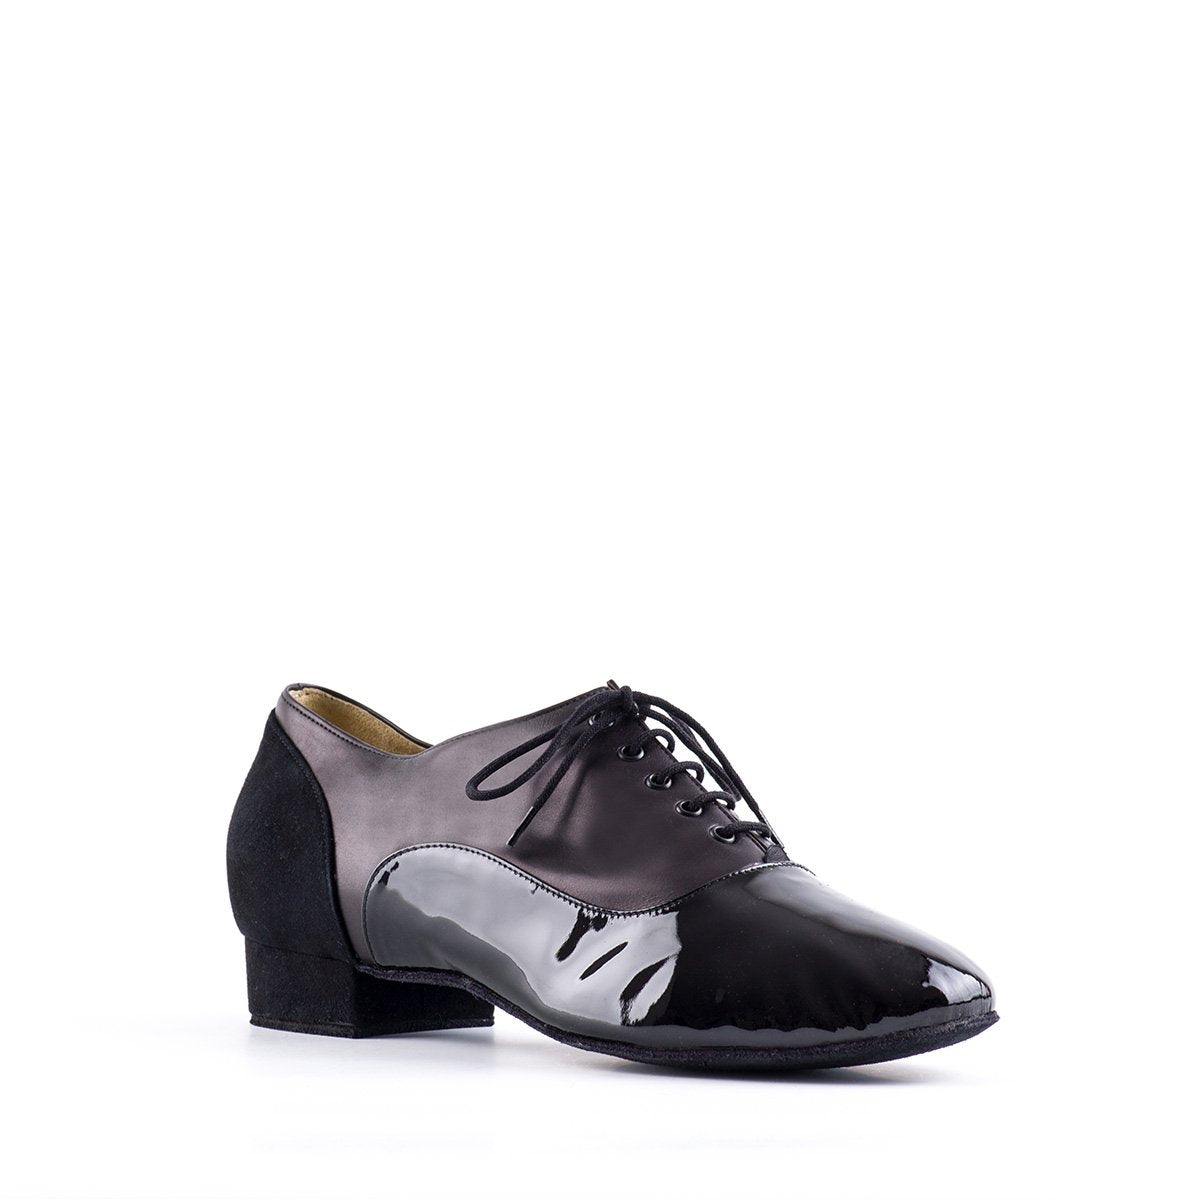 Men's black patent ballroom dance shoe